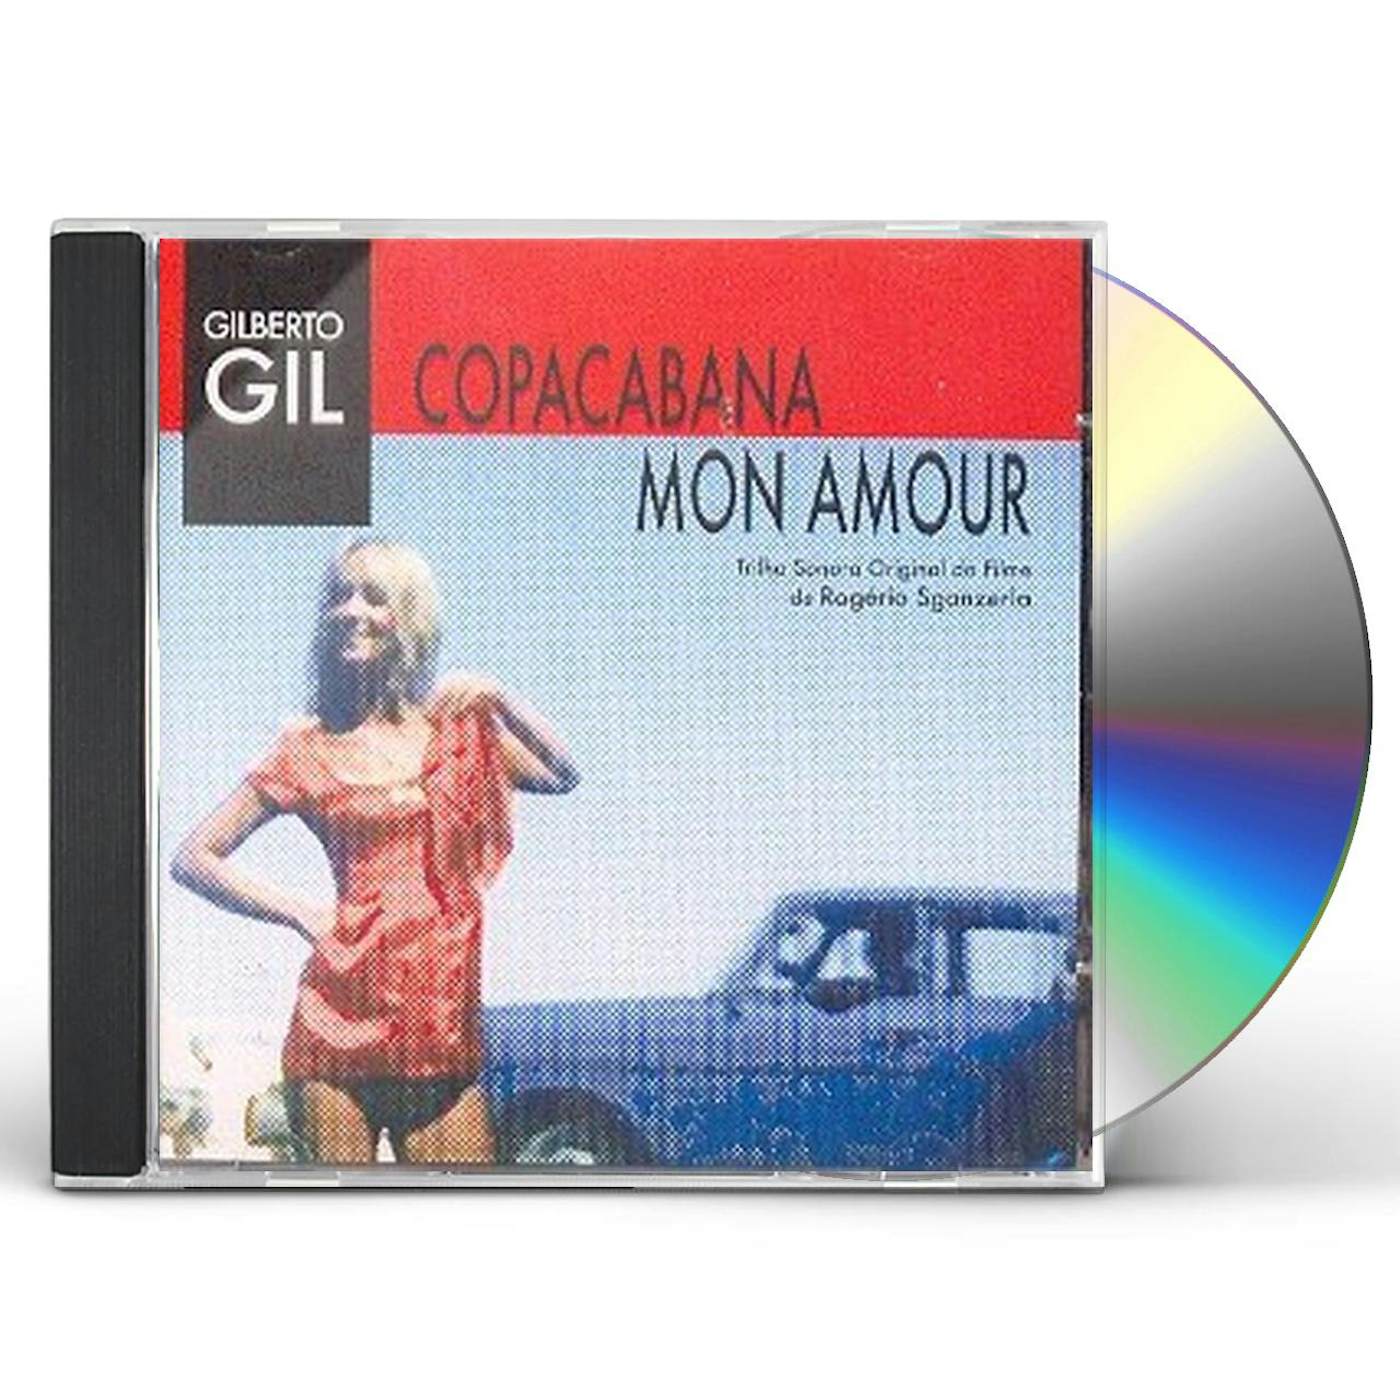 Gilberto Gil COPACABANA MON AMOUR CD